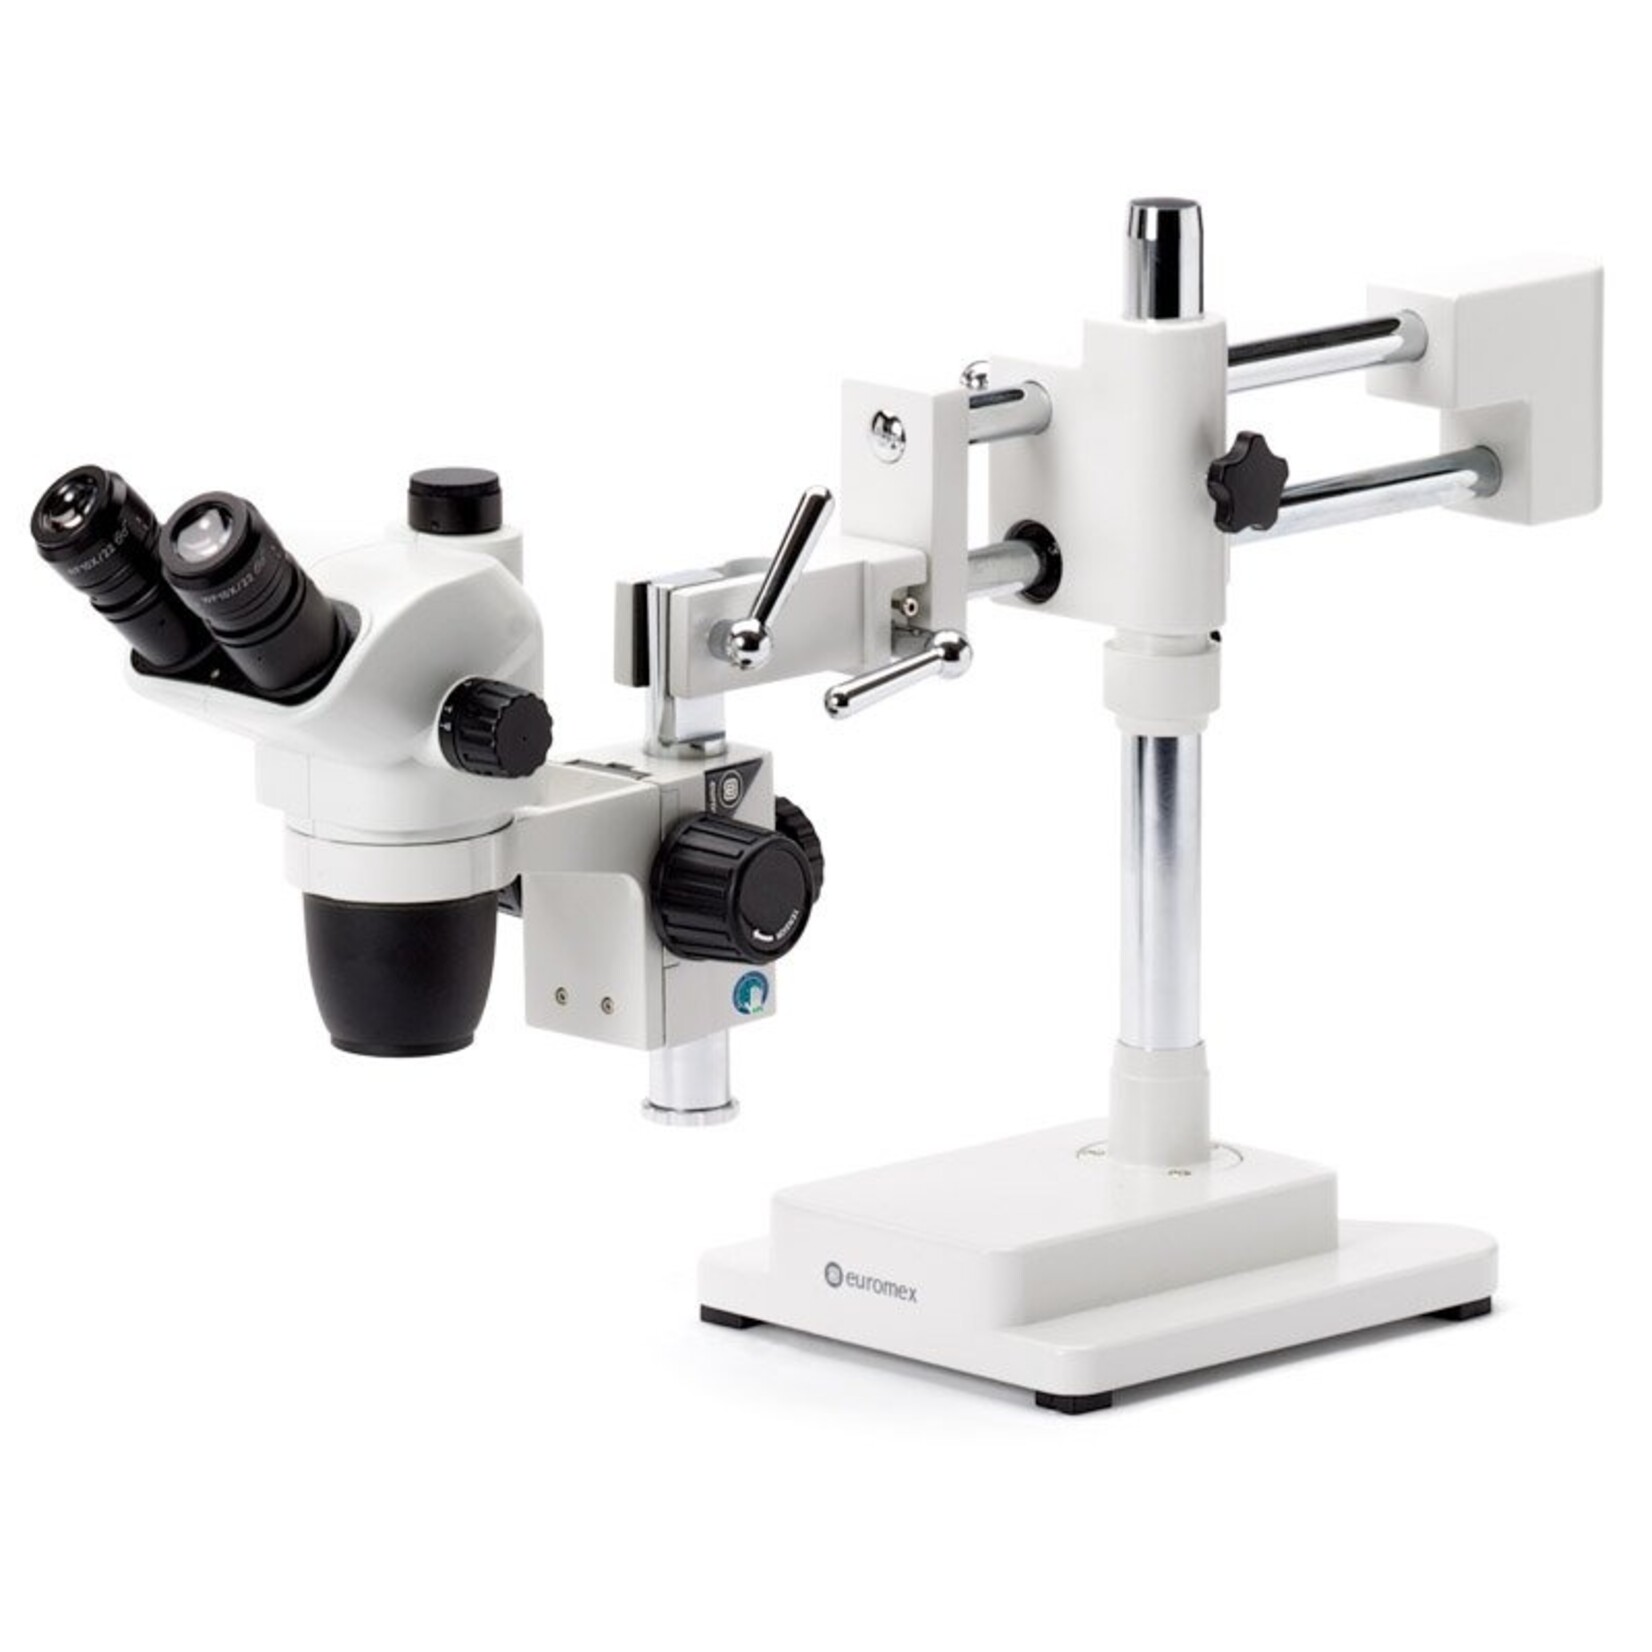 Trinocular stereo zoom microscope NexiusZoom EVO-DFS, 0.65x to 5.5x zoom objective, magnification from 6.5x to 55x